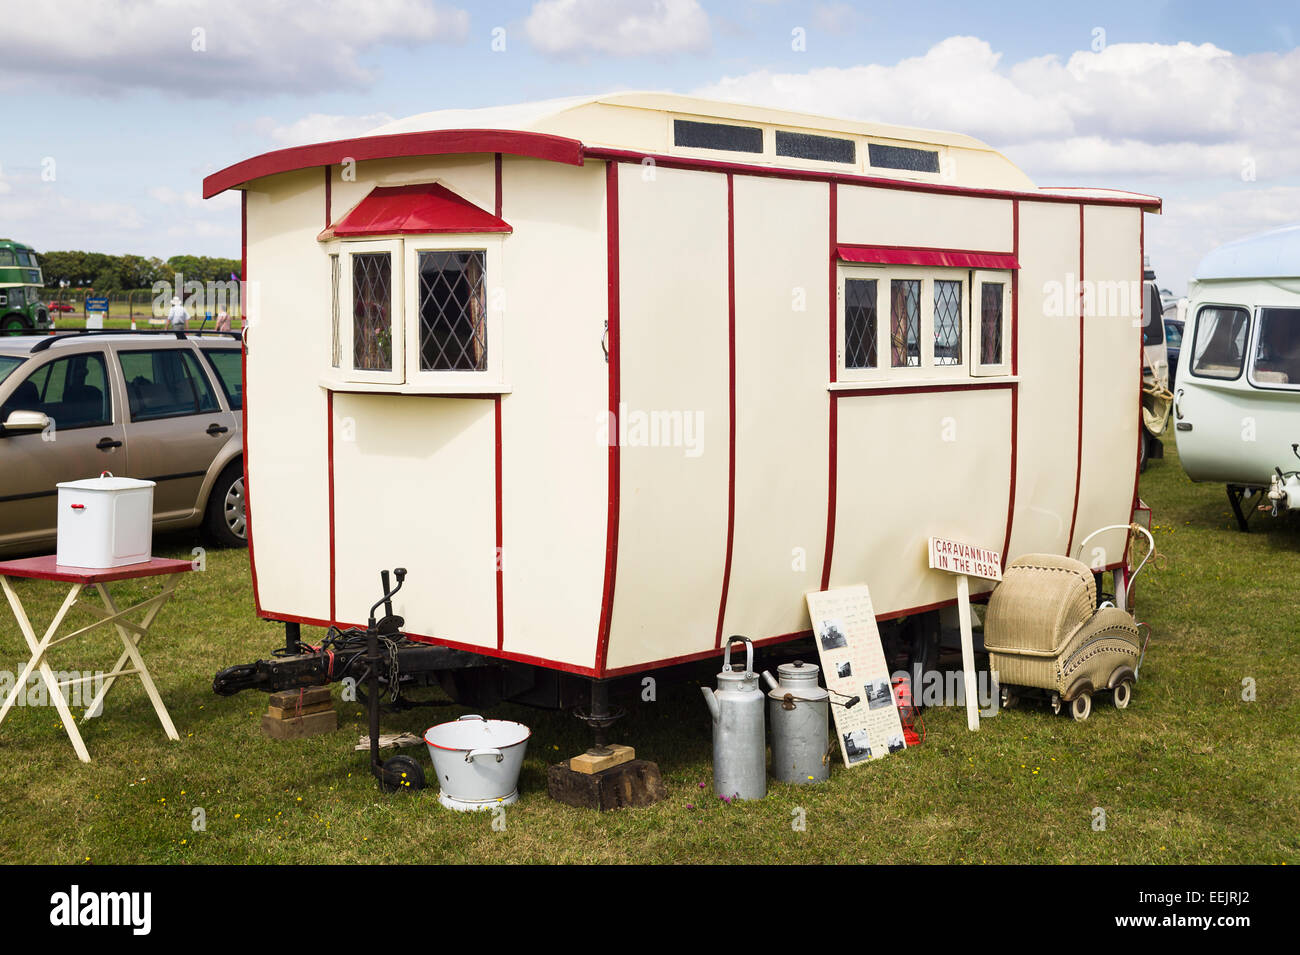 Old Eccles vintage caravan at an English show Stock Photo